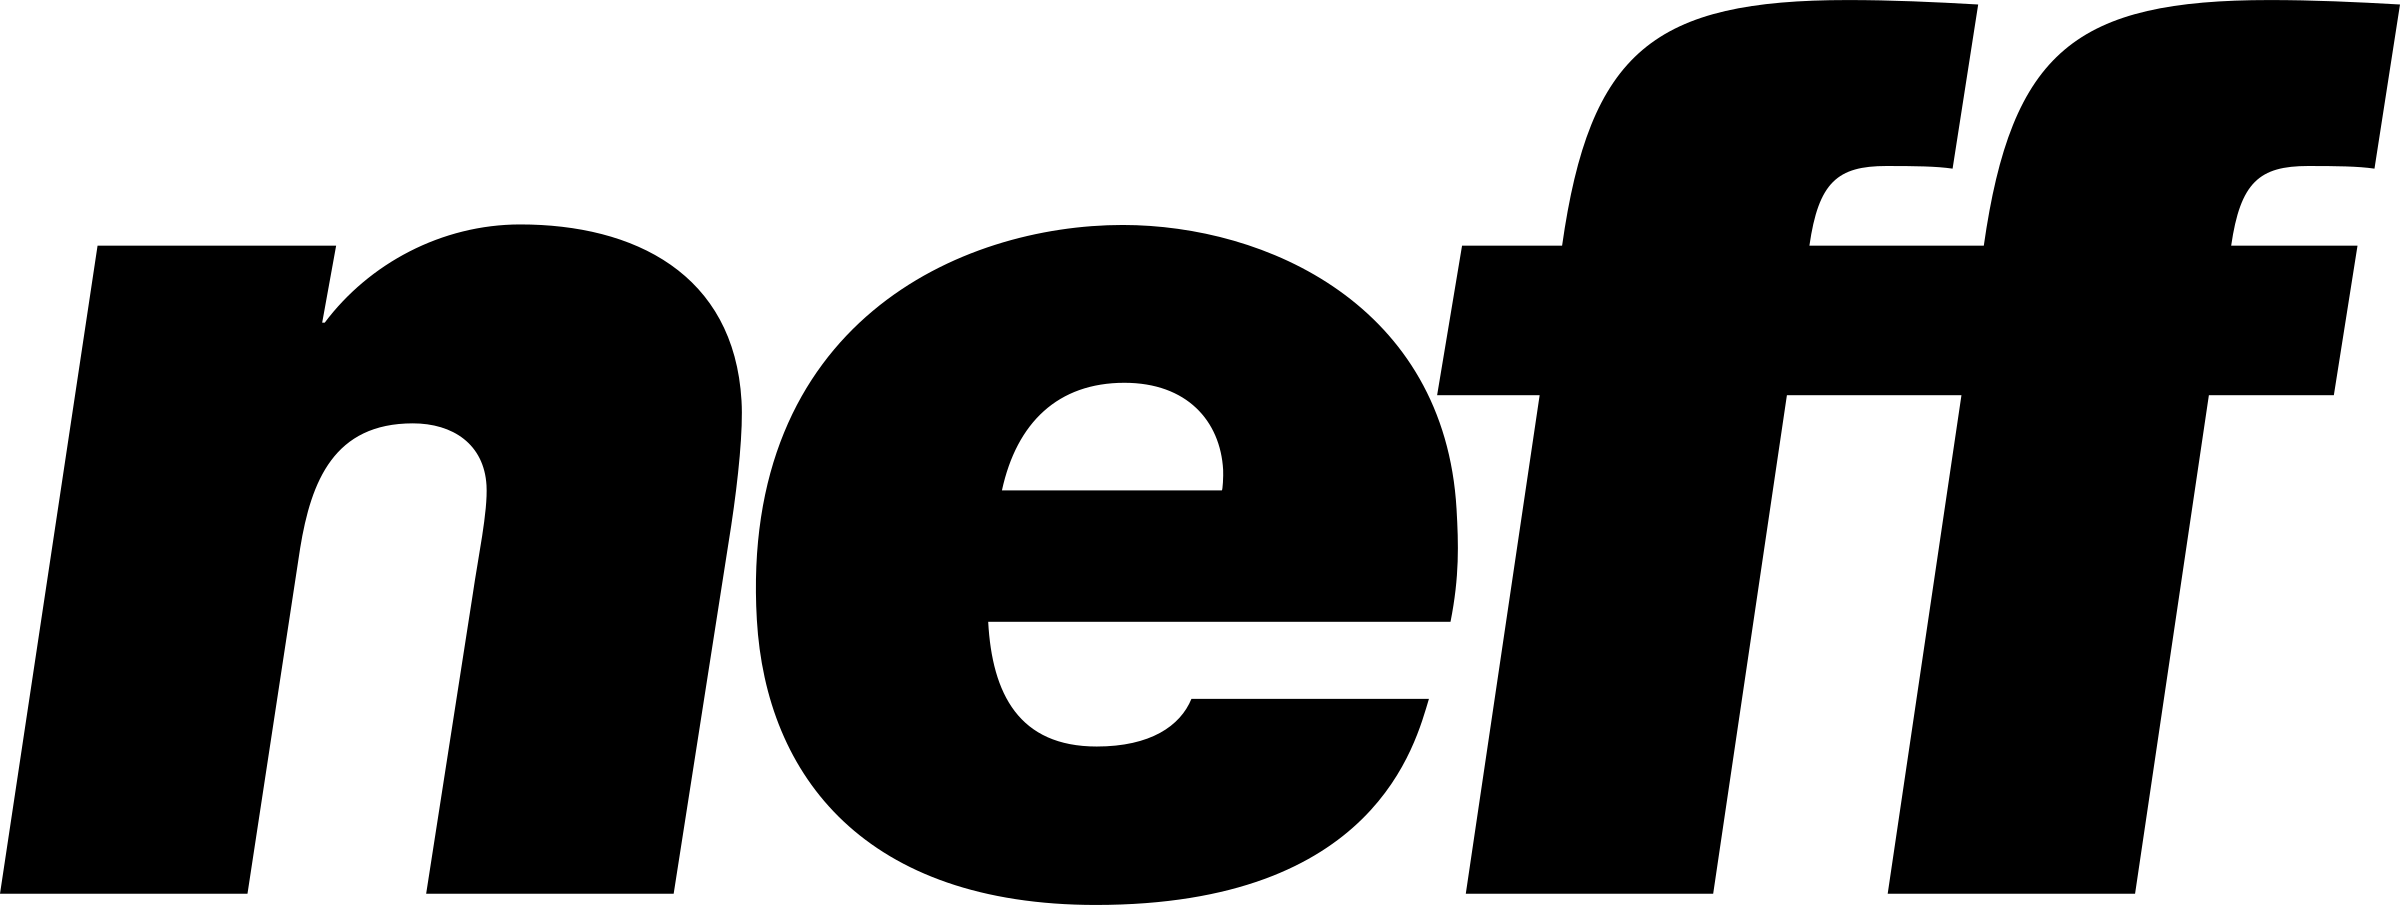 Neff with Hat Logo - Neff Logo PNG Transparent & SVG Vector